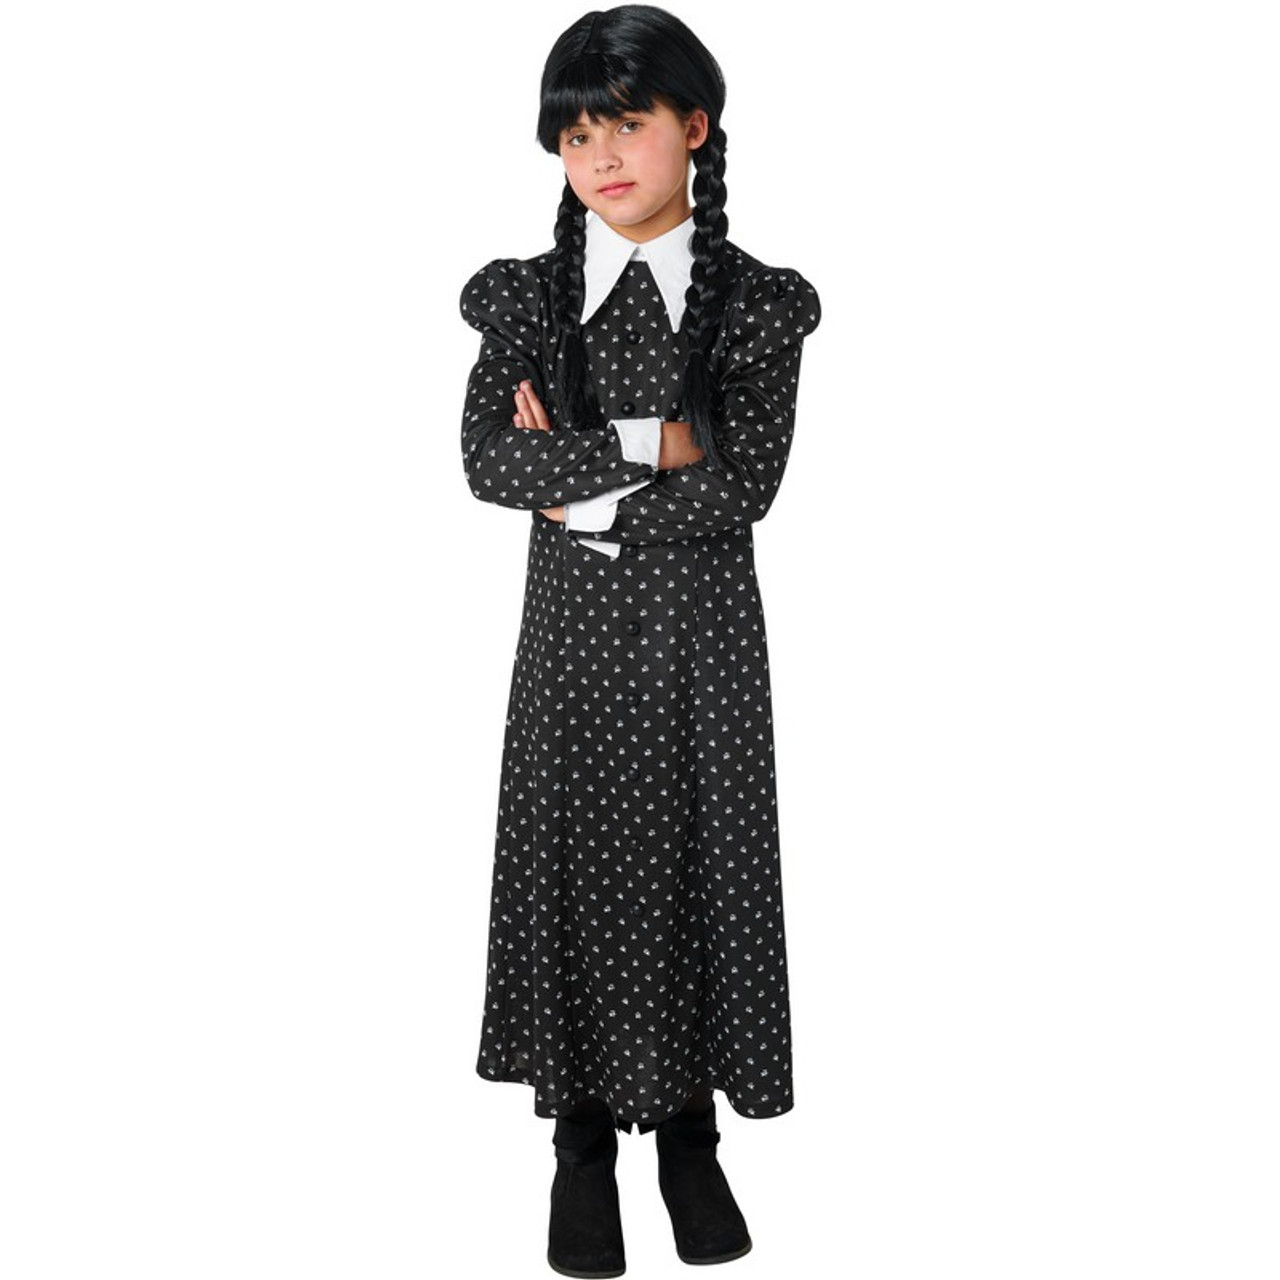 Wednesday Addams Girl's Costume Inset 2